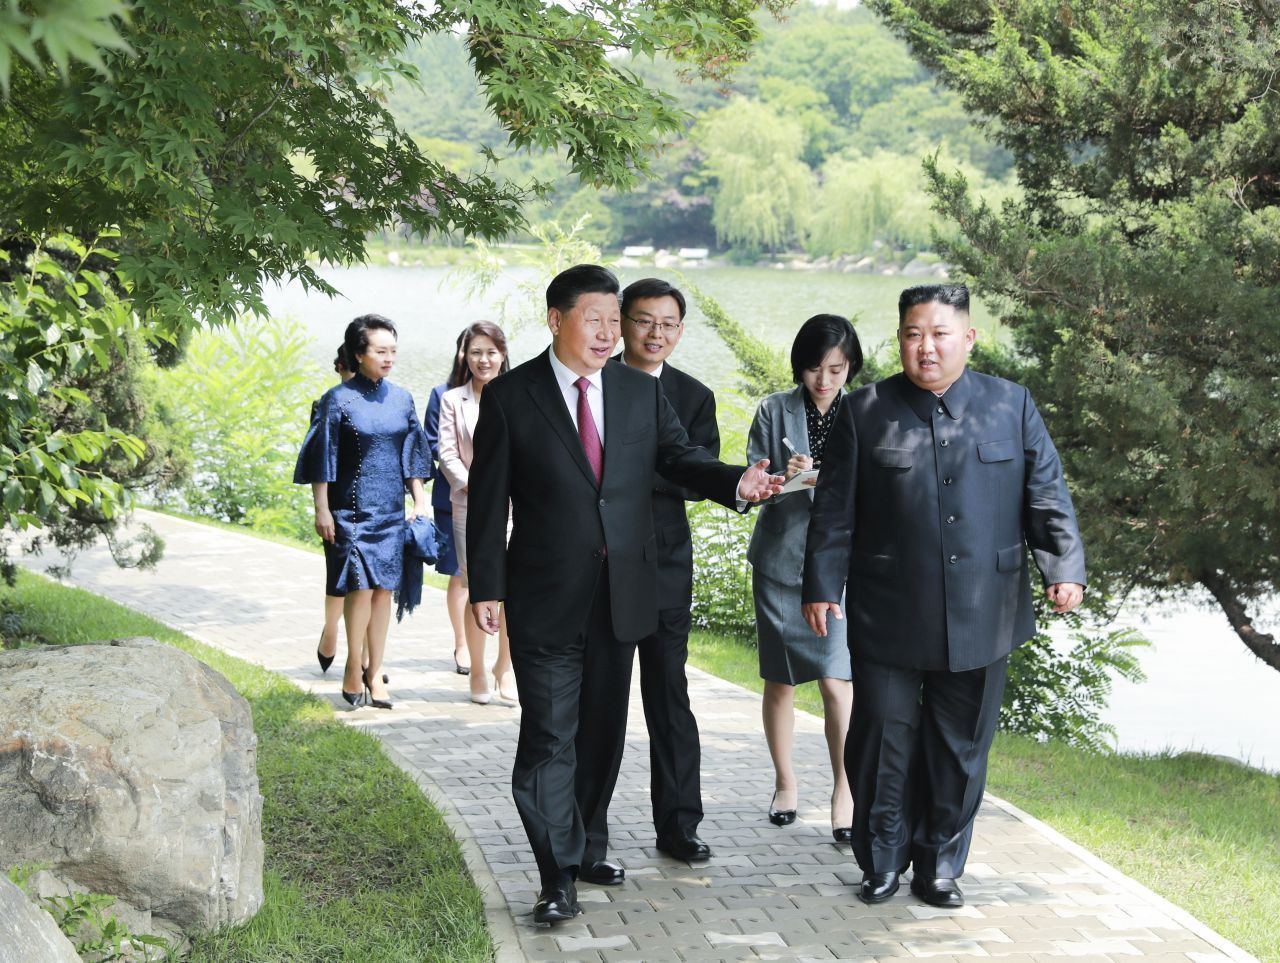 Am 21. Juni 2019 empfang Kim Jong-un den chinesischen Präsidenten Xi Jinping in Pjöngjang. Es war der erste Staatsbesuch eines chinesischen Präsidenten in Nordkorea seit 14 Jahren. China ist ein wichtiger Partner Nordkoreas.